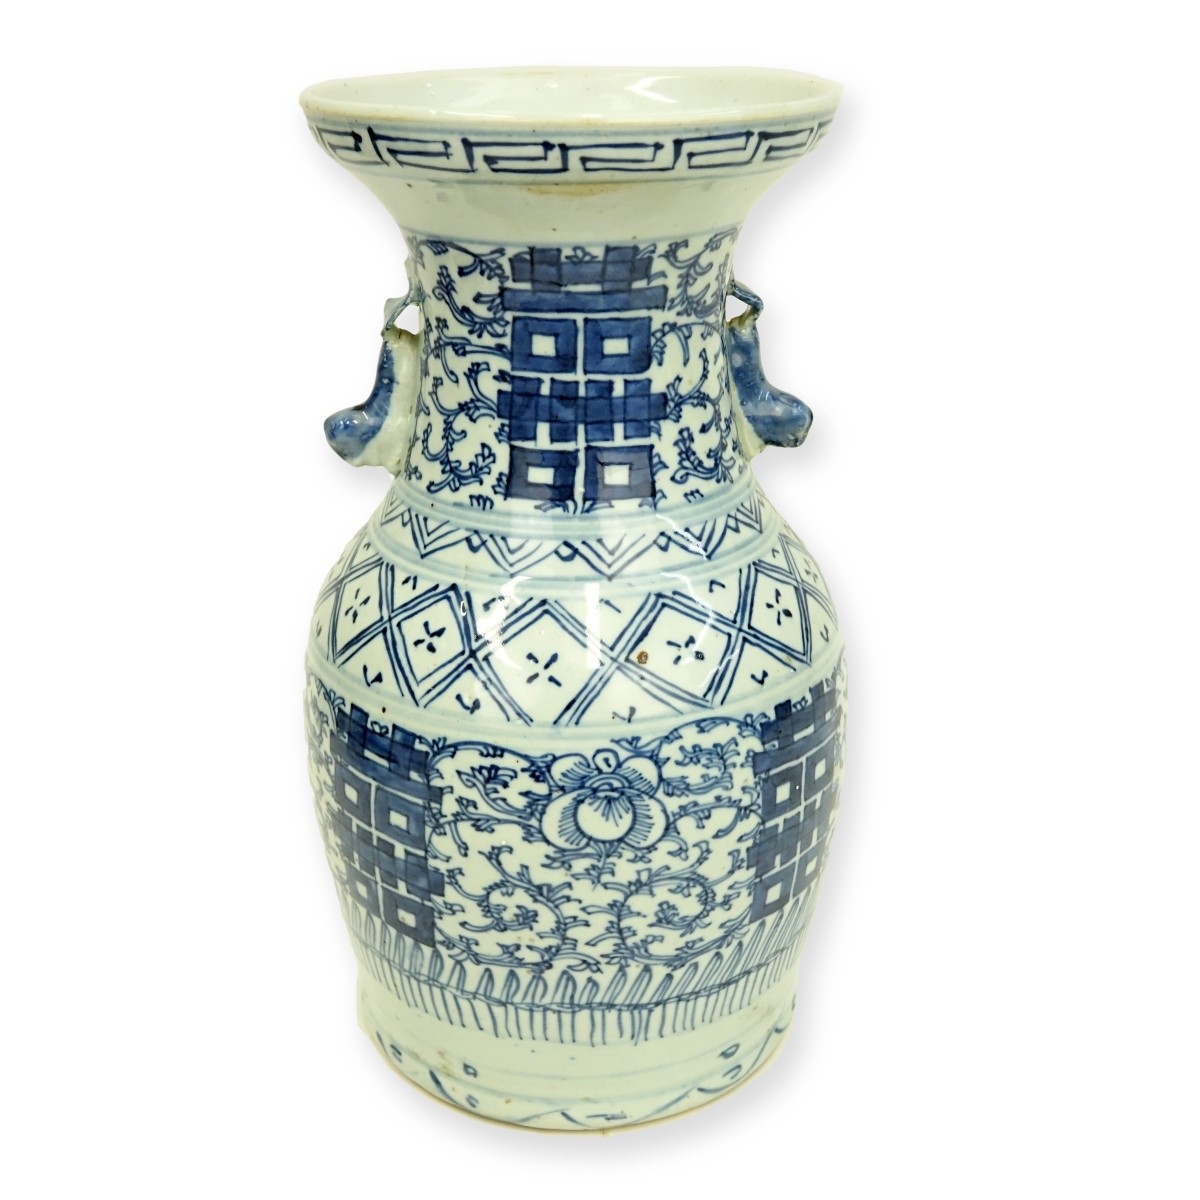 Antique Chinese Porcelain Handled Vase